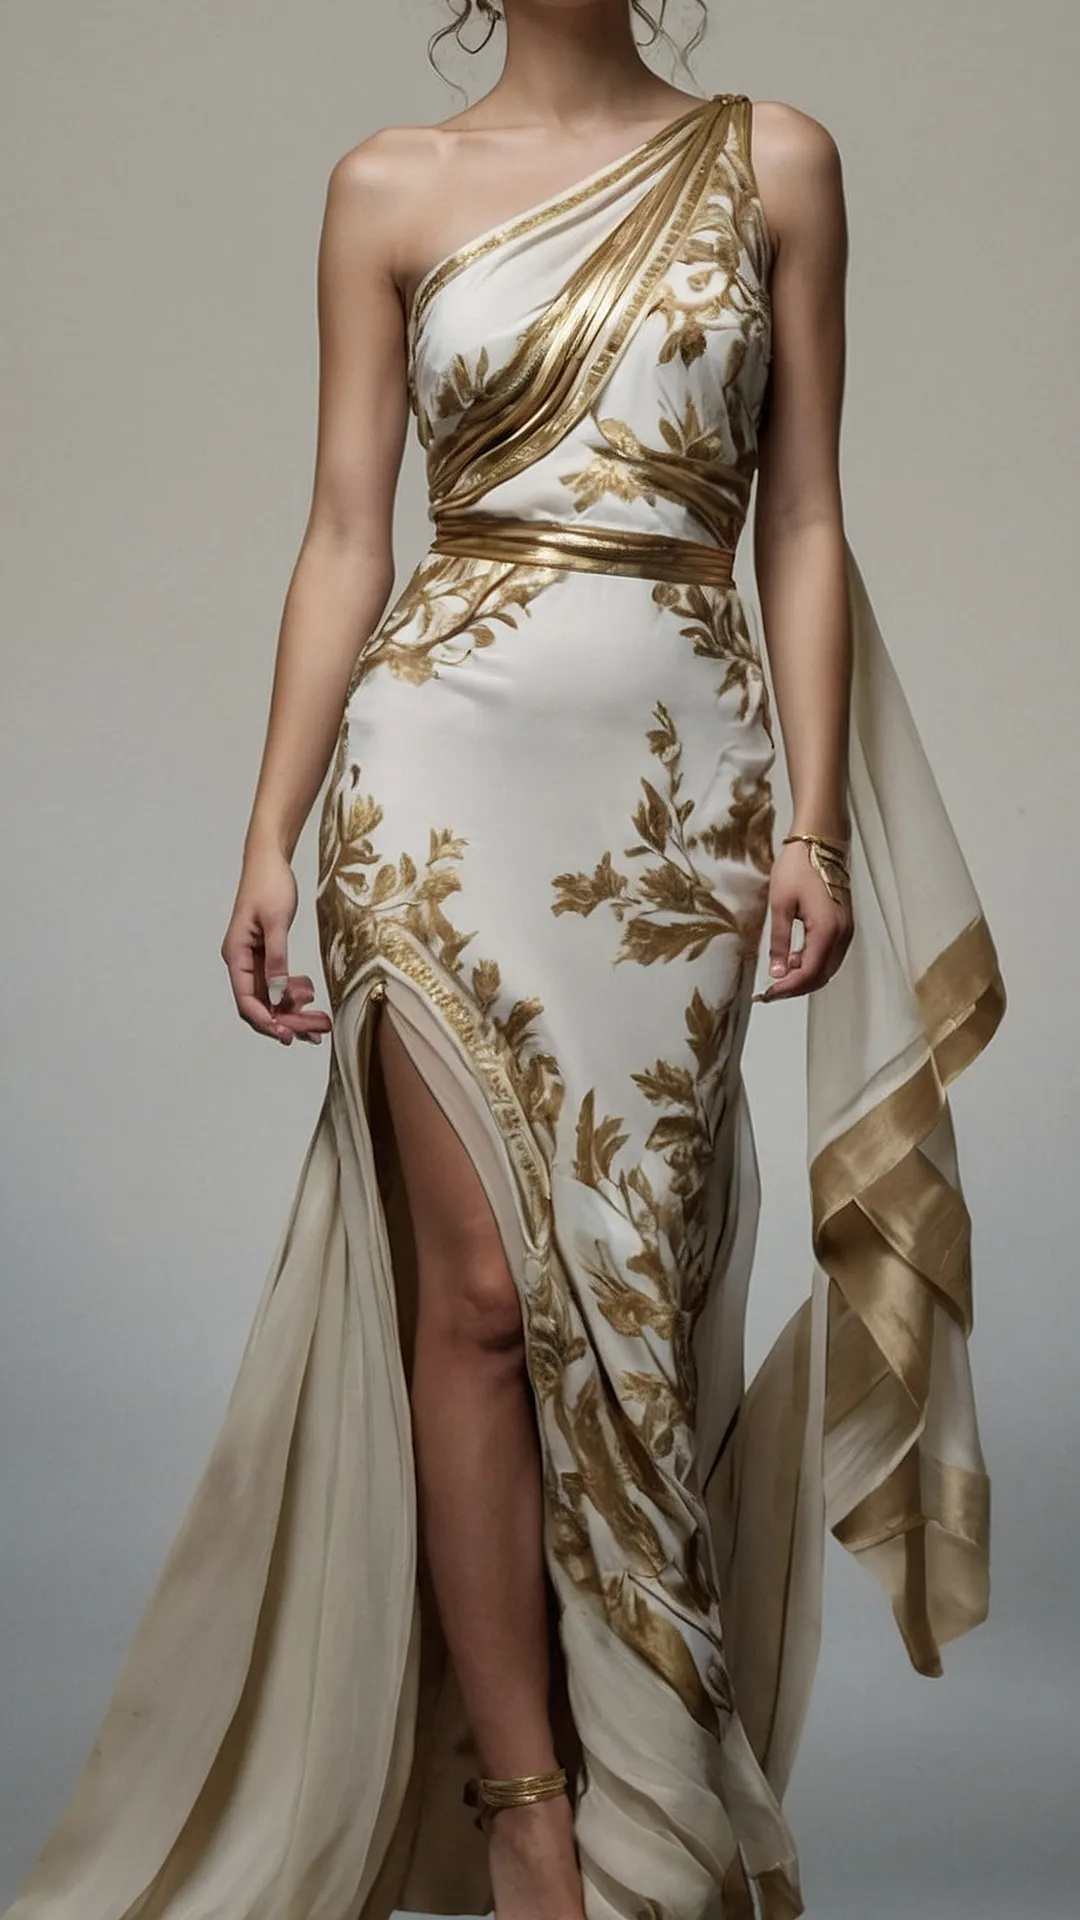 Athena's Wardrobe: Iconic Greek Goddess Dress Designs